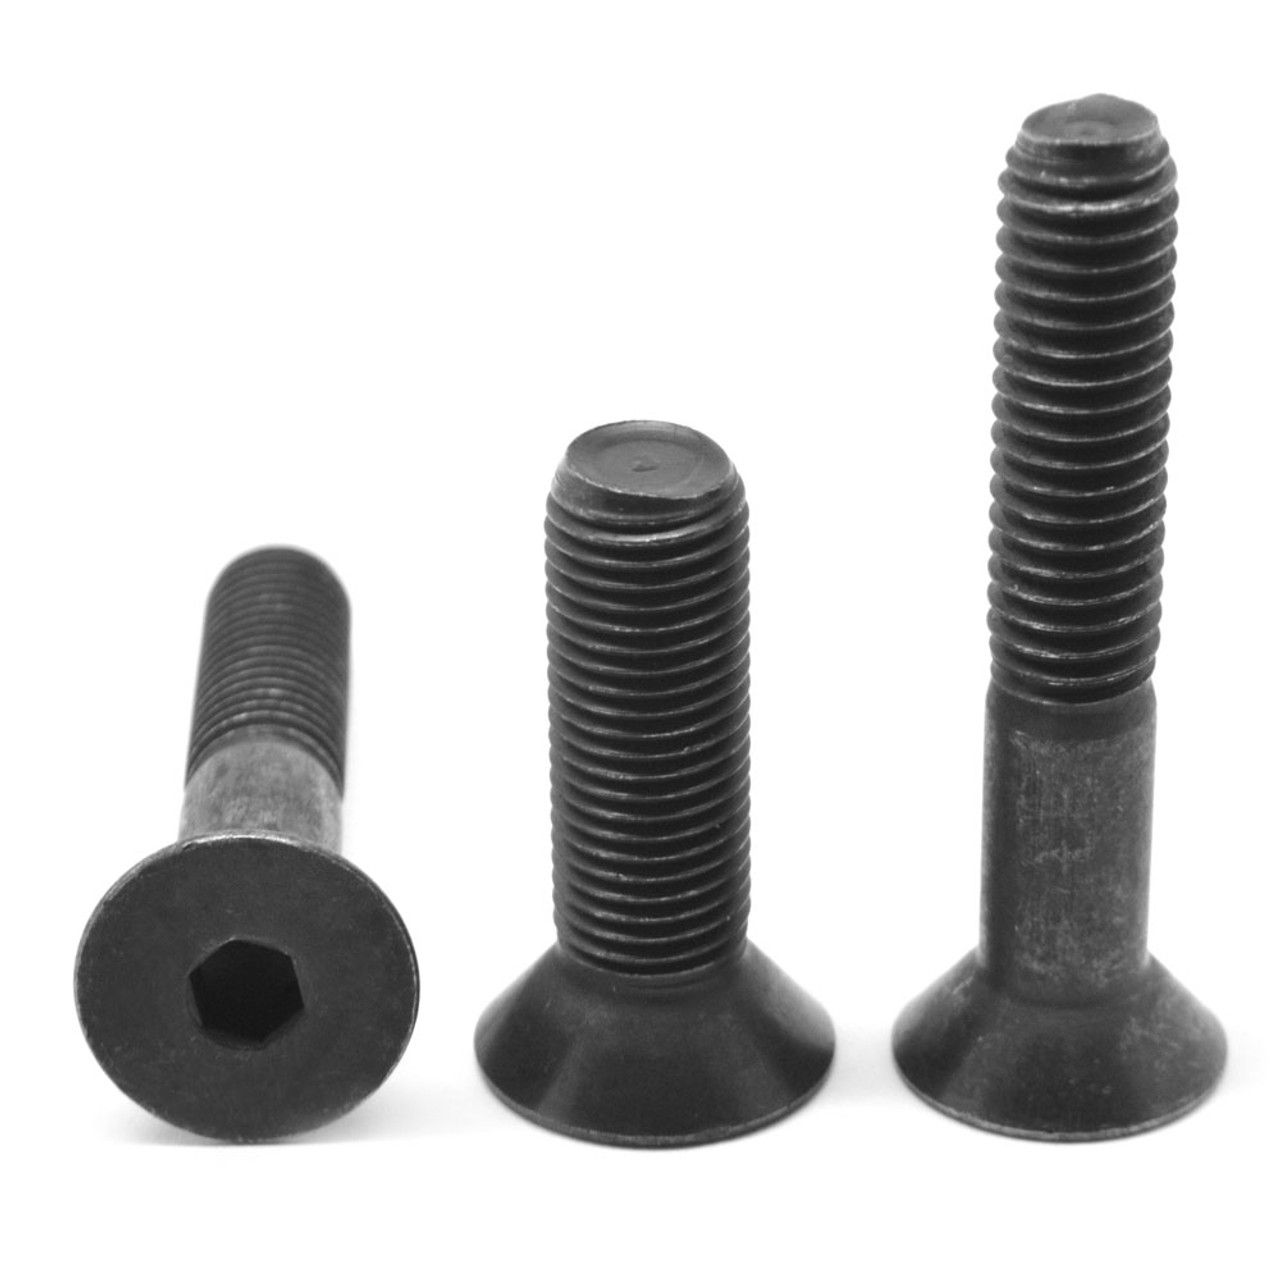 2-56 x 3/16 Button Socket Cap Screws - Black Oxide (25 Pack)